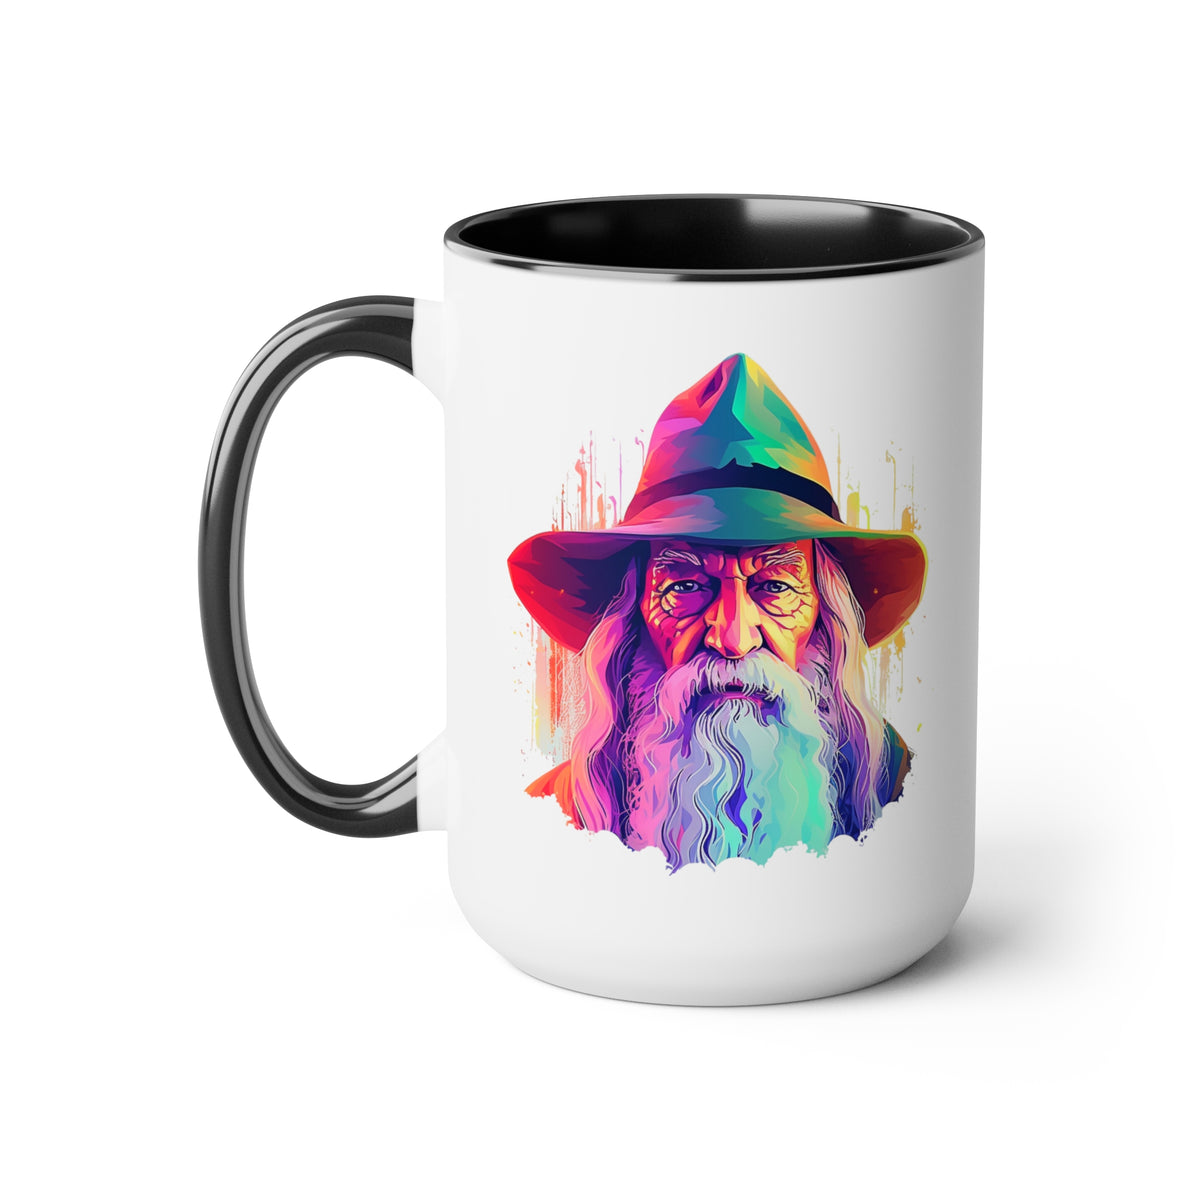 Magical Mornings with our Gandalf Coffee Mug